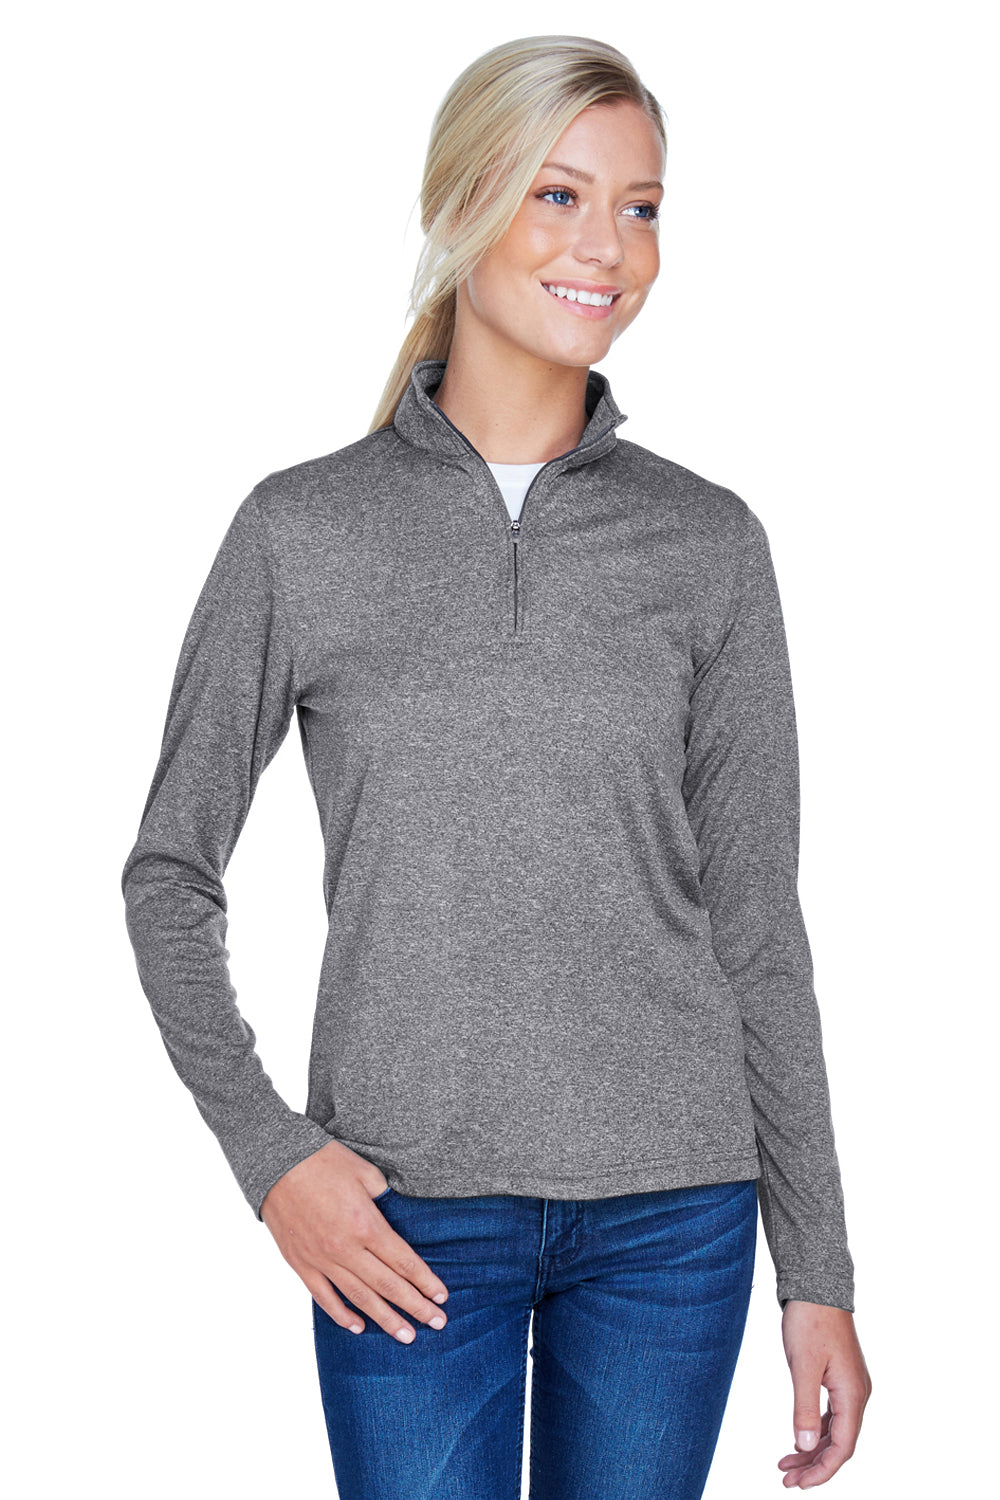 UltraClub 8618W Womens Heather Cool & Dry Performance Moisture Wicking 1/4 Zip Sweatshirt Charcoal Grey Front